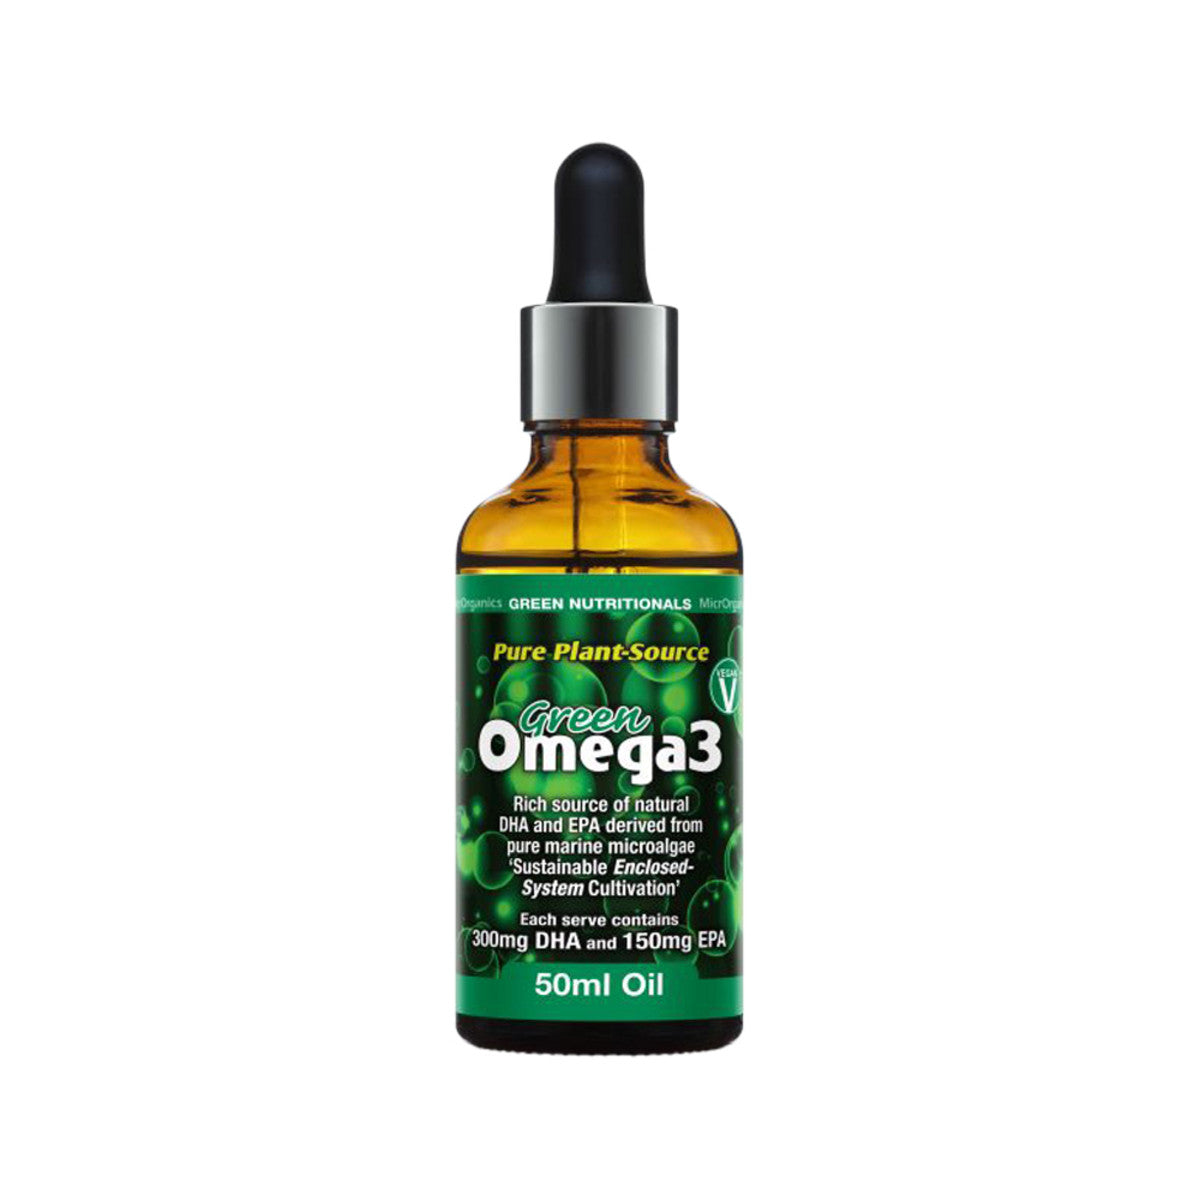 MicrOrganics Green Nutrit Green Omega3 Oil 50ml